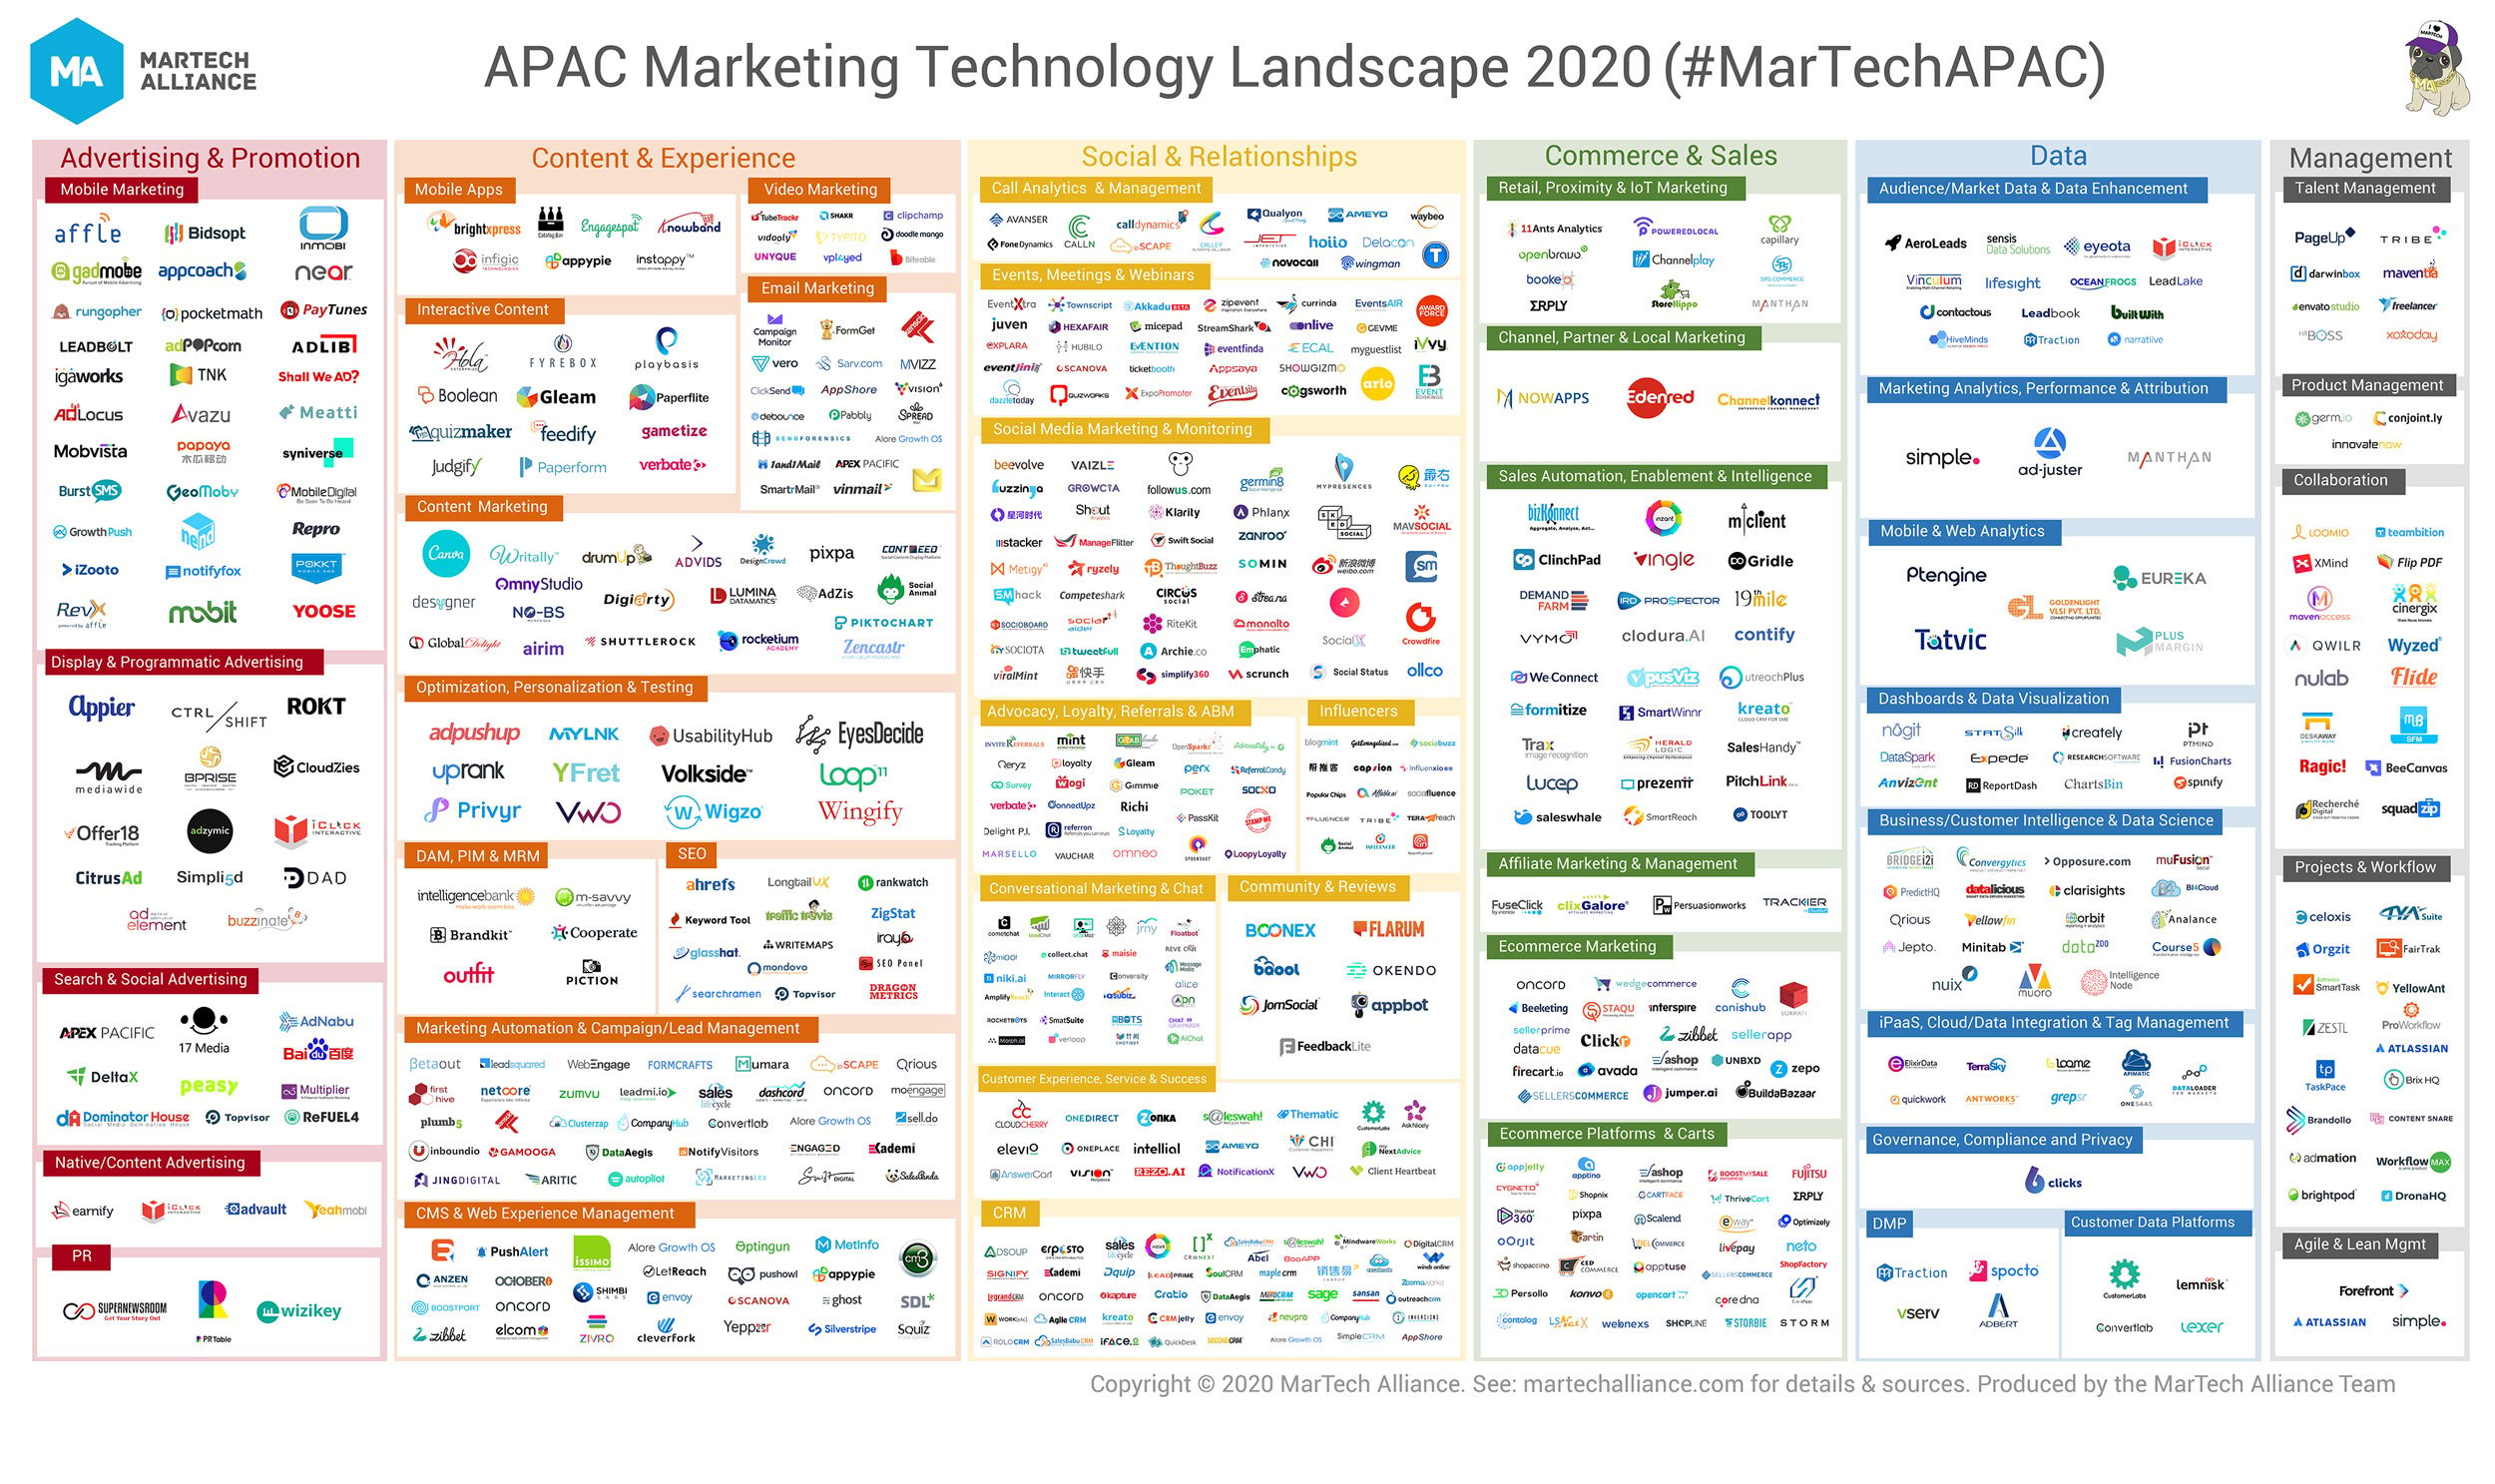 APAC Marketing Technology Landscape 2020 final